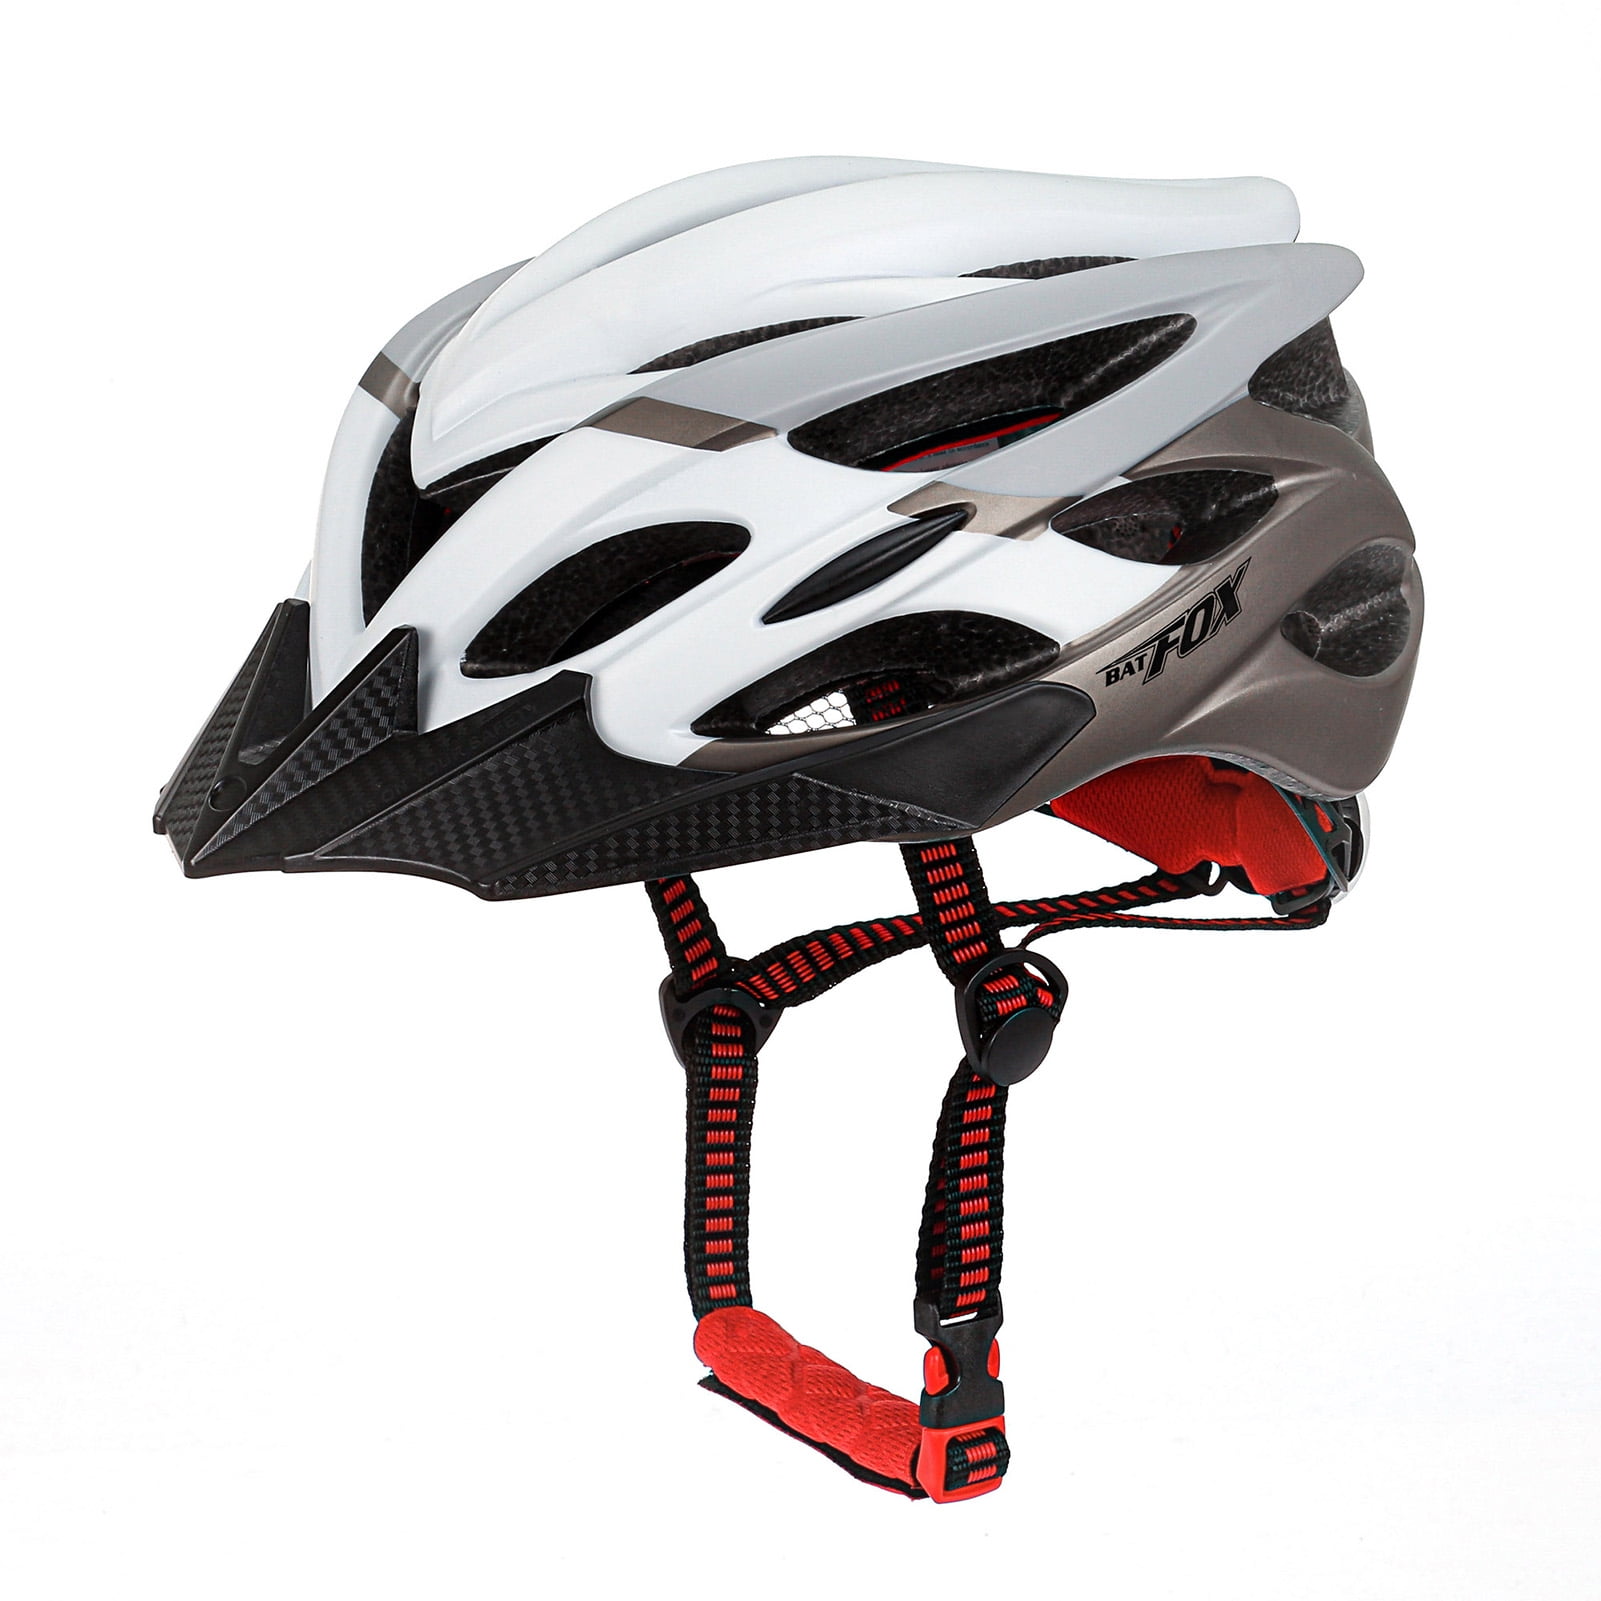 Details about   MTB Bike Cycling Helmet Adult Bicycle Rode Mens Ladies Adjustable Safety Helmet 